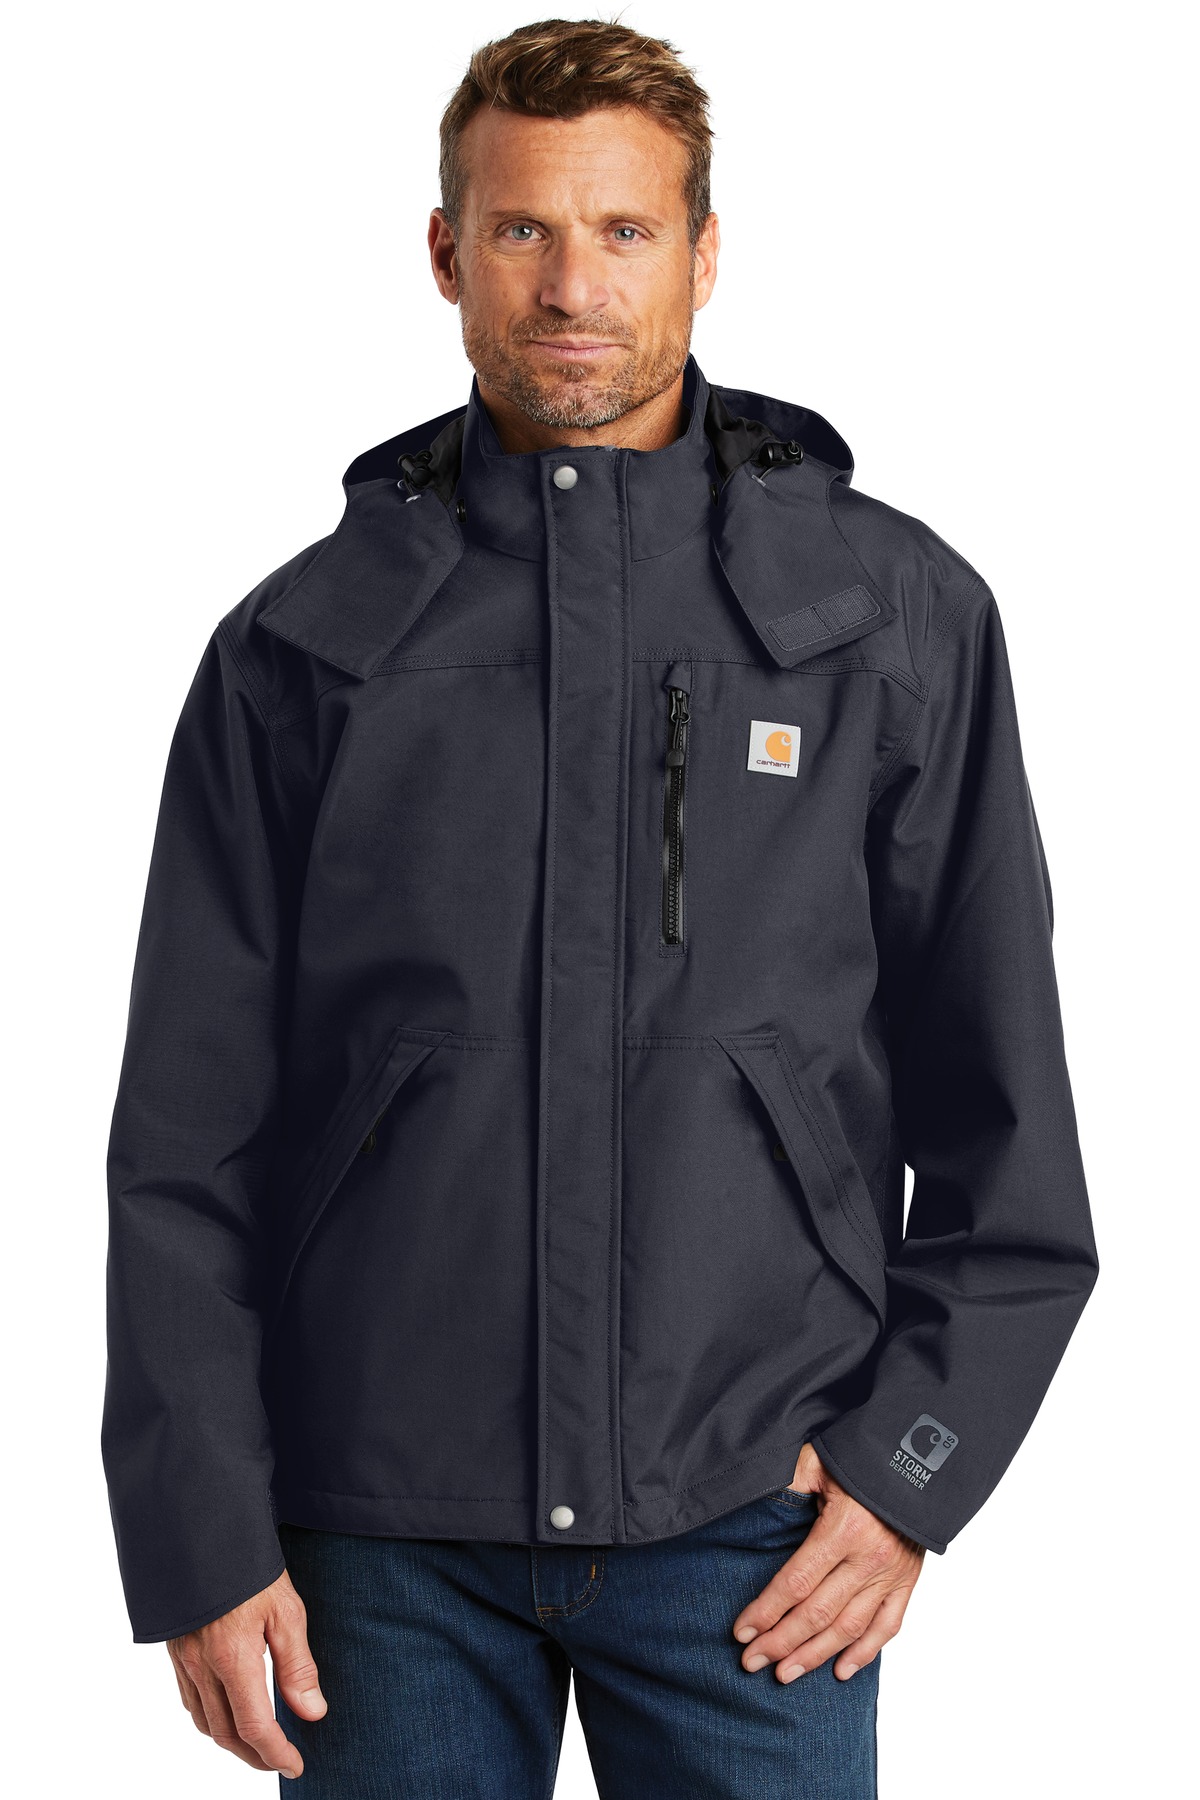 Men's Carhartt navy winter jacket